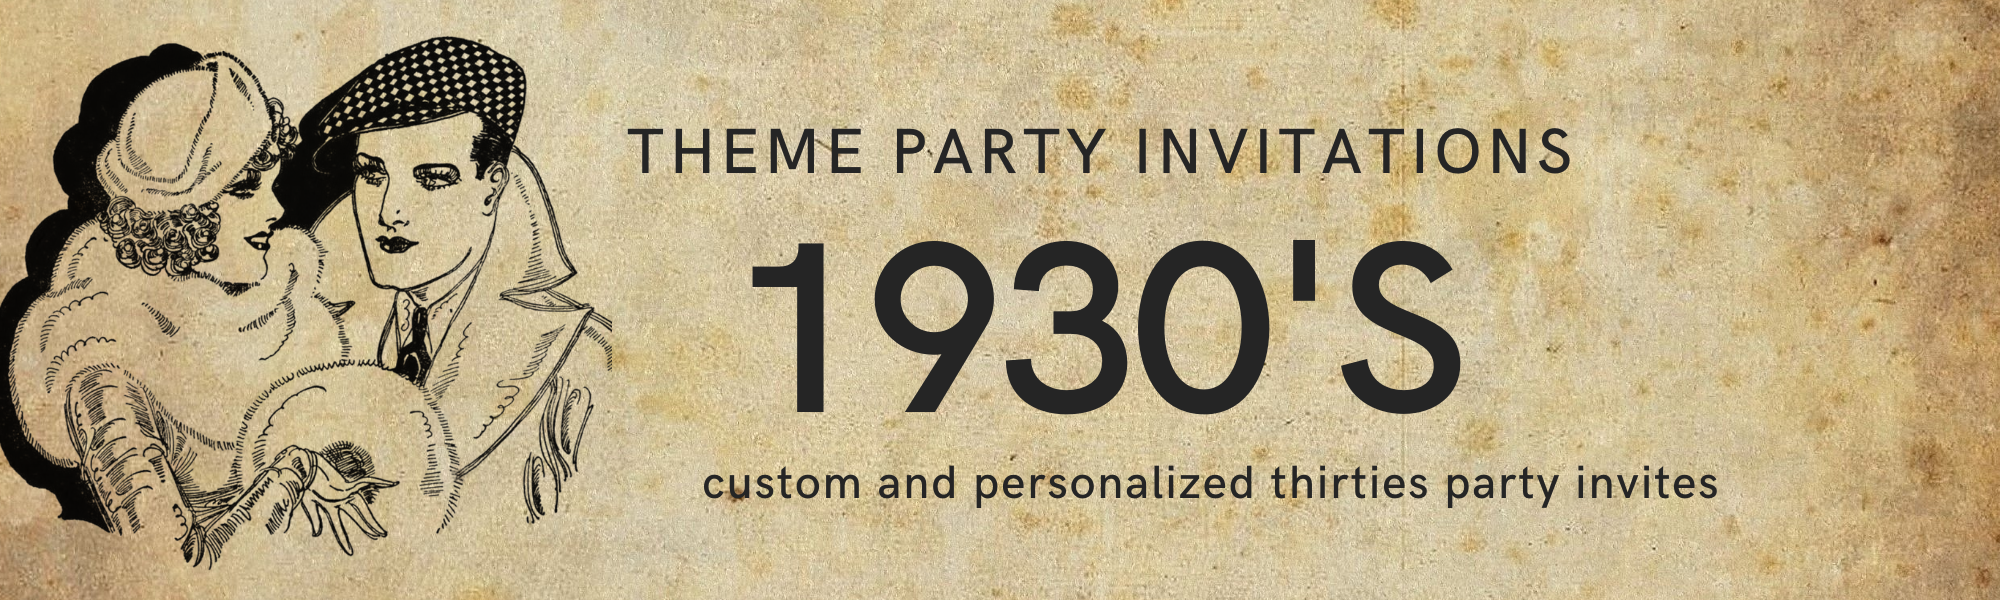 1930s theme party invitations